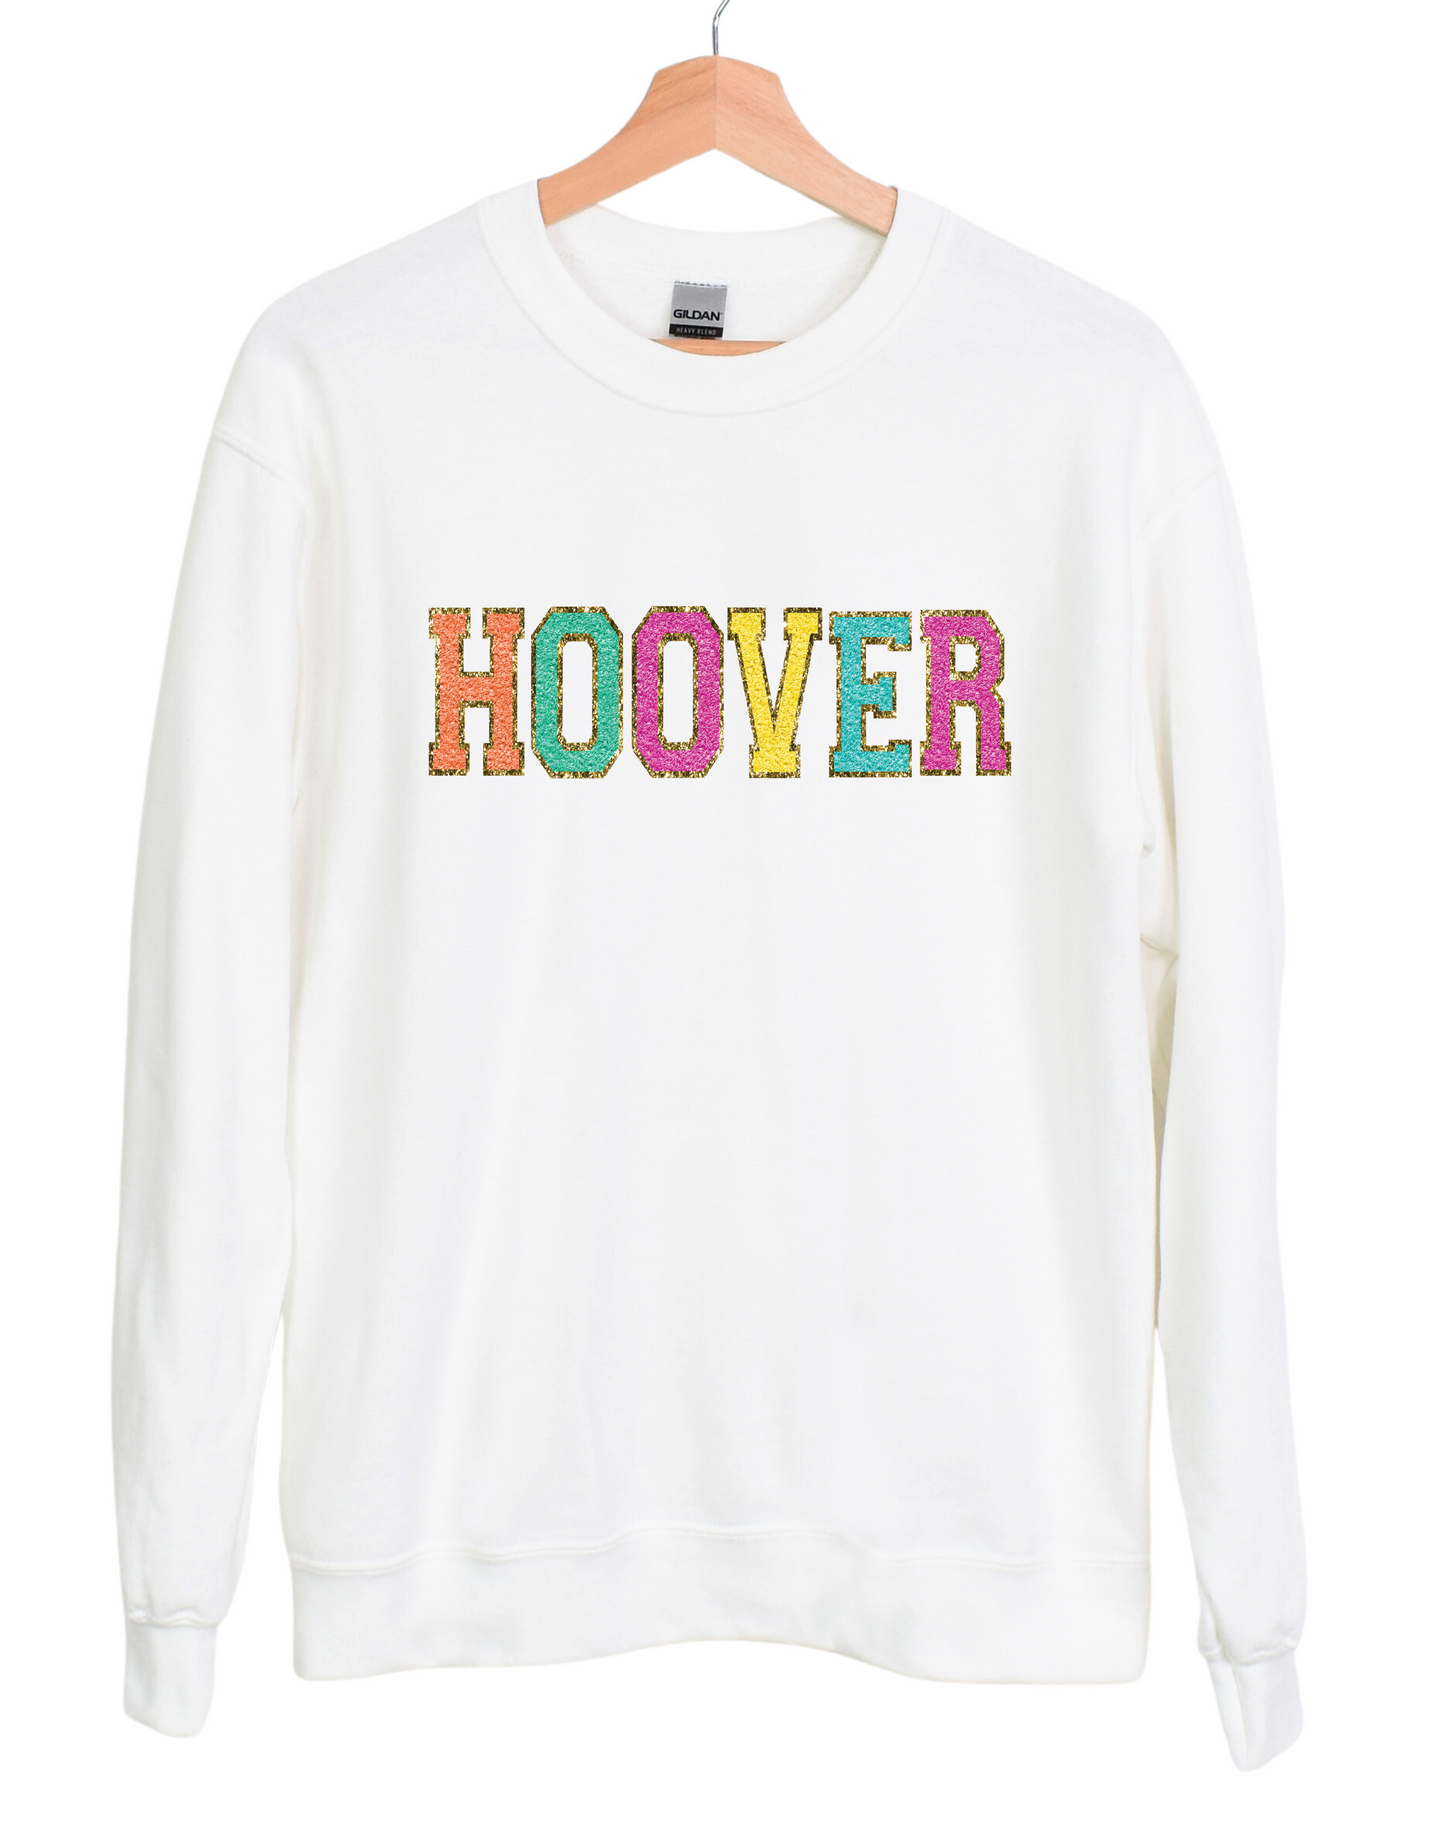 Hoover Color Crewnecks